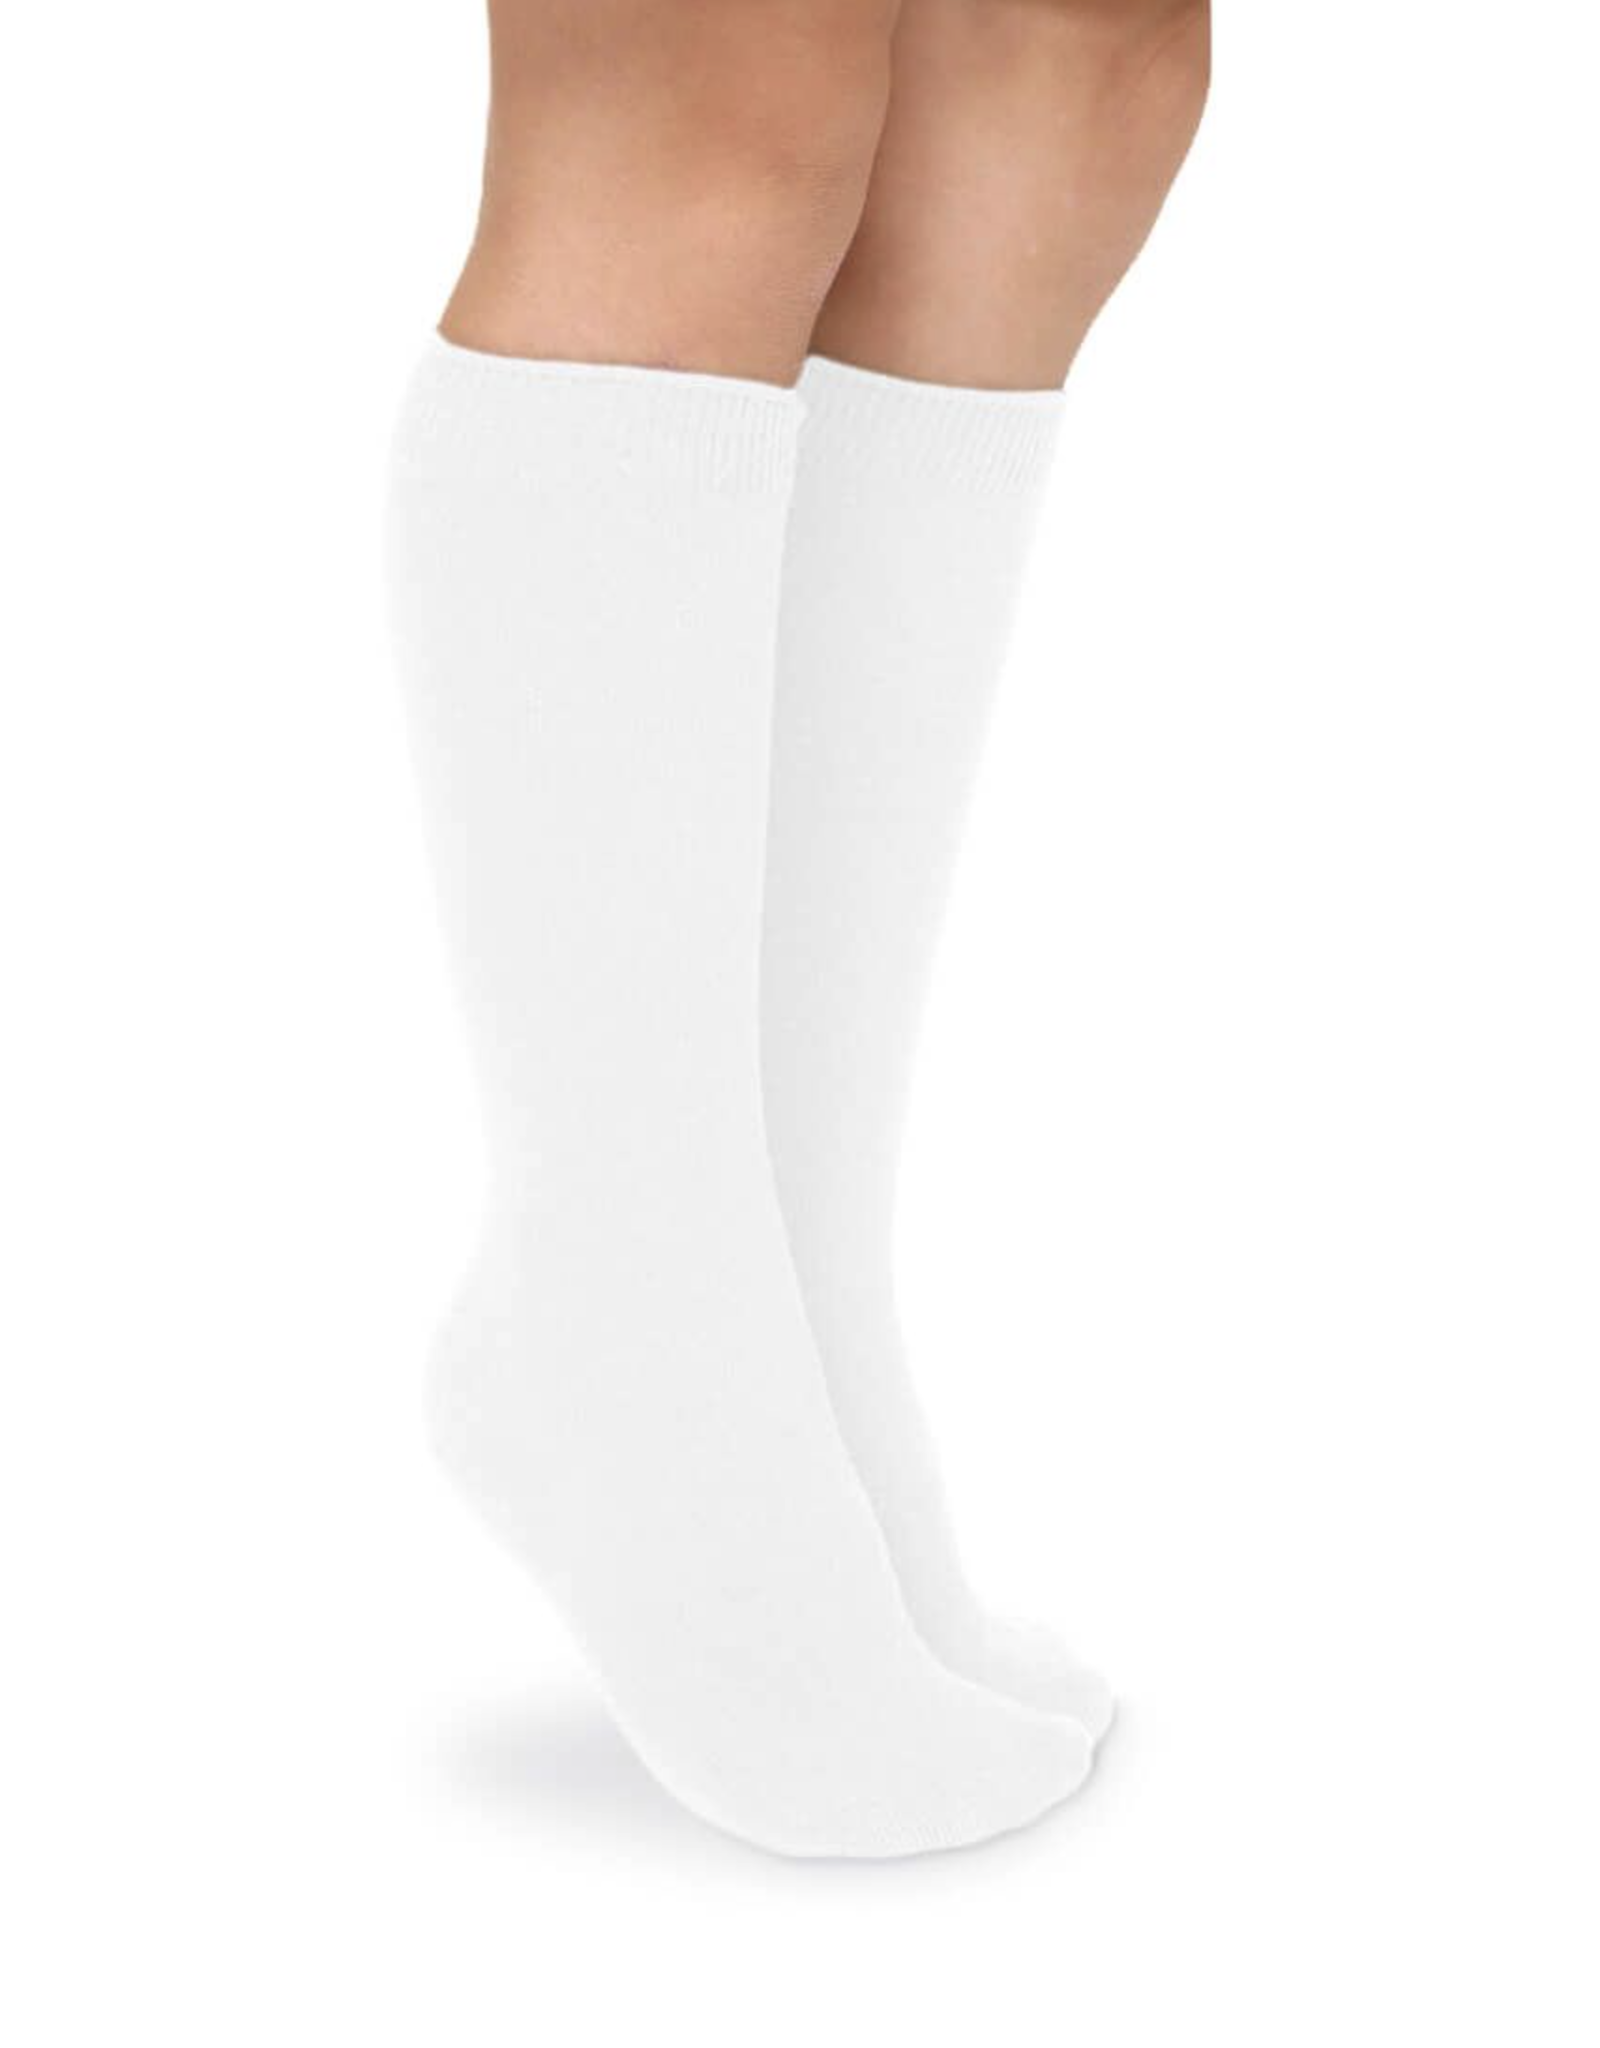 Jefferies Socks White Cotton Knee High 2 Pack 1600